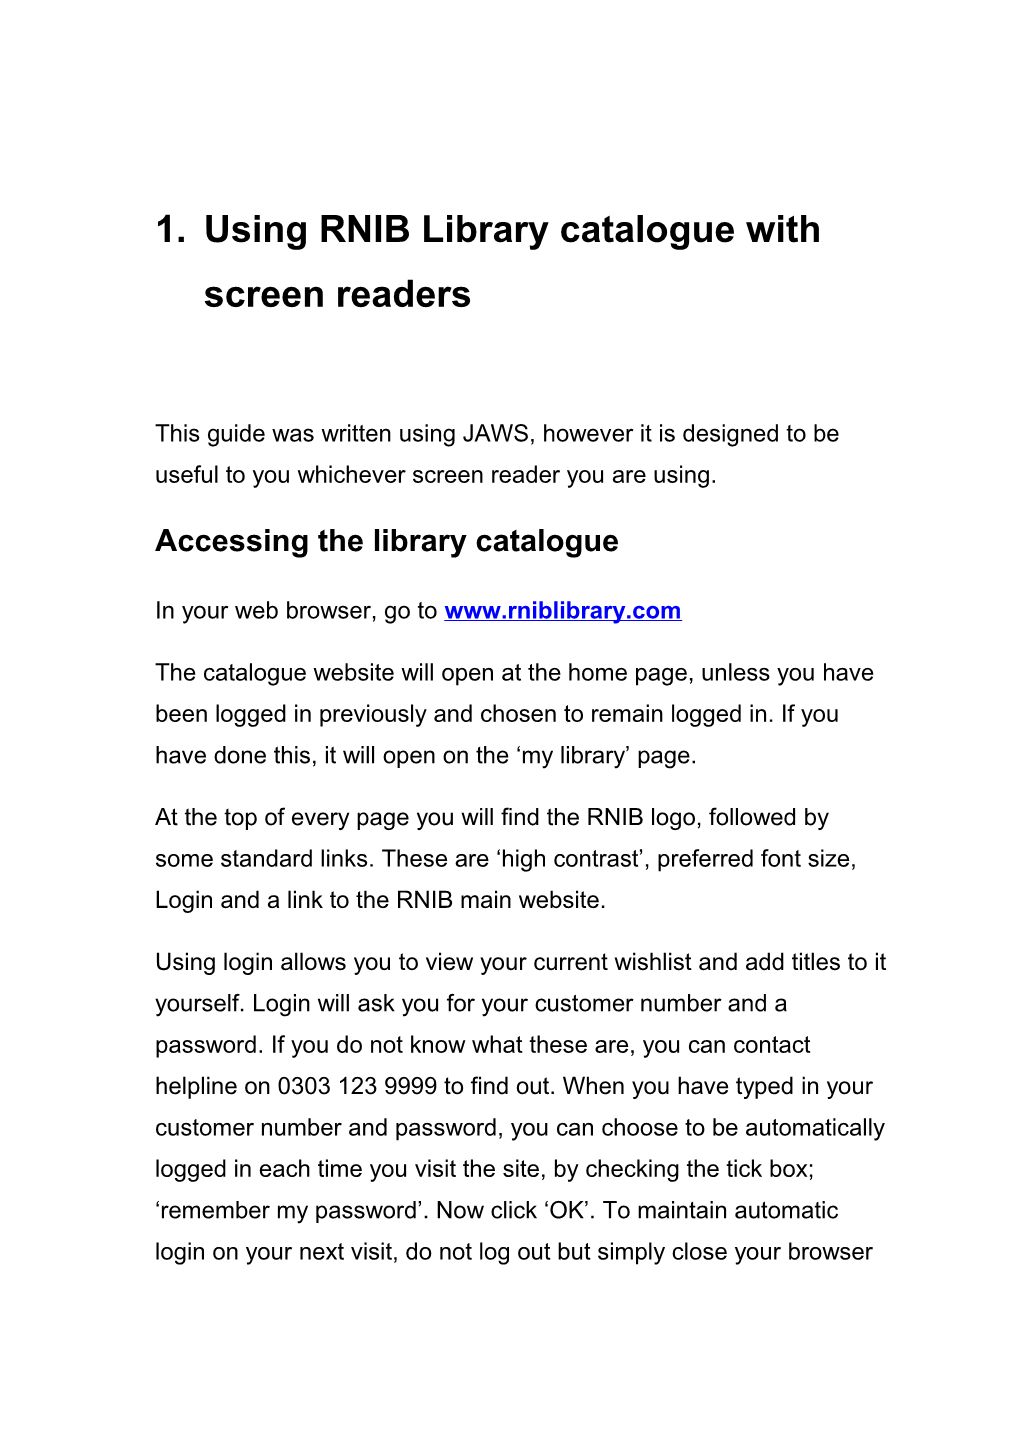 Using RNIB Library Catalogue with Screen Readers